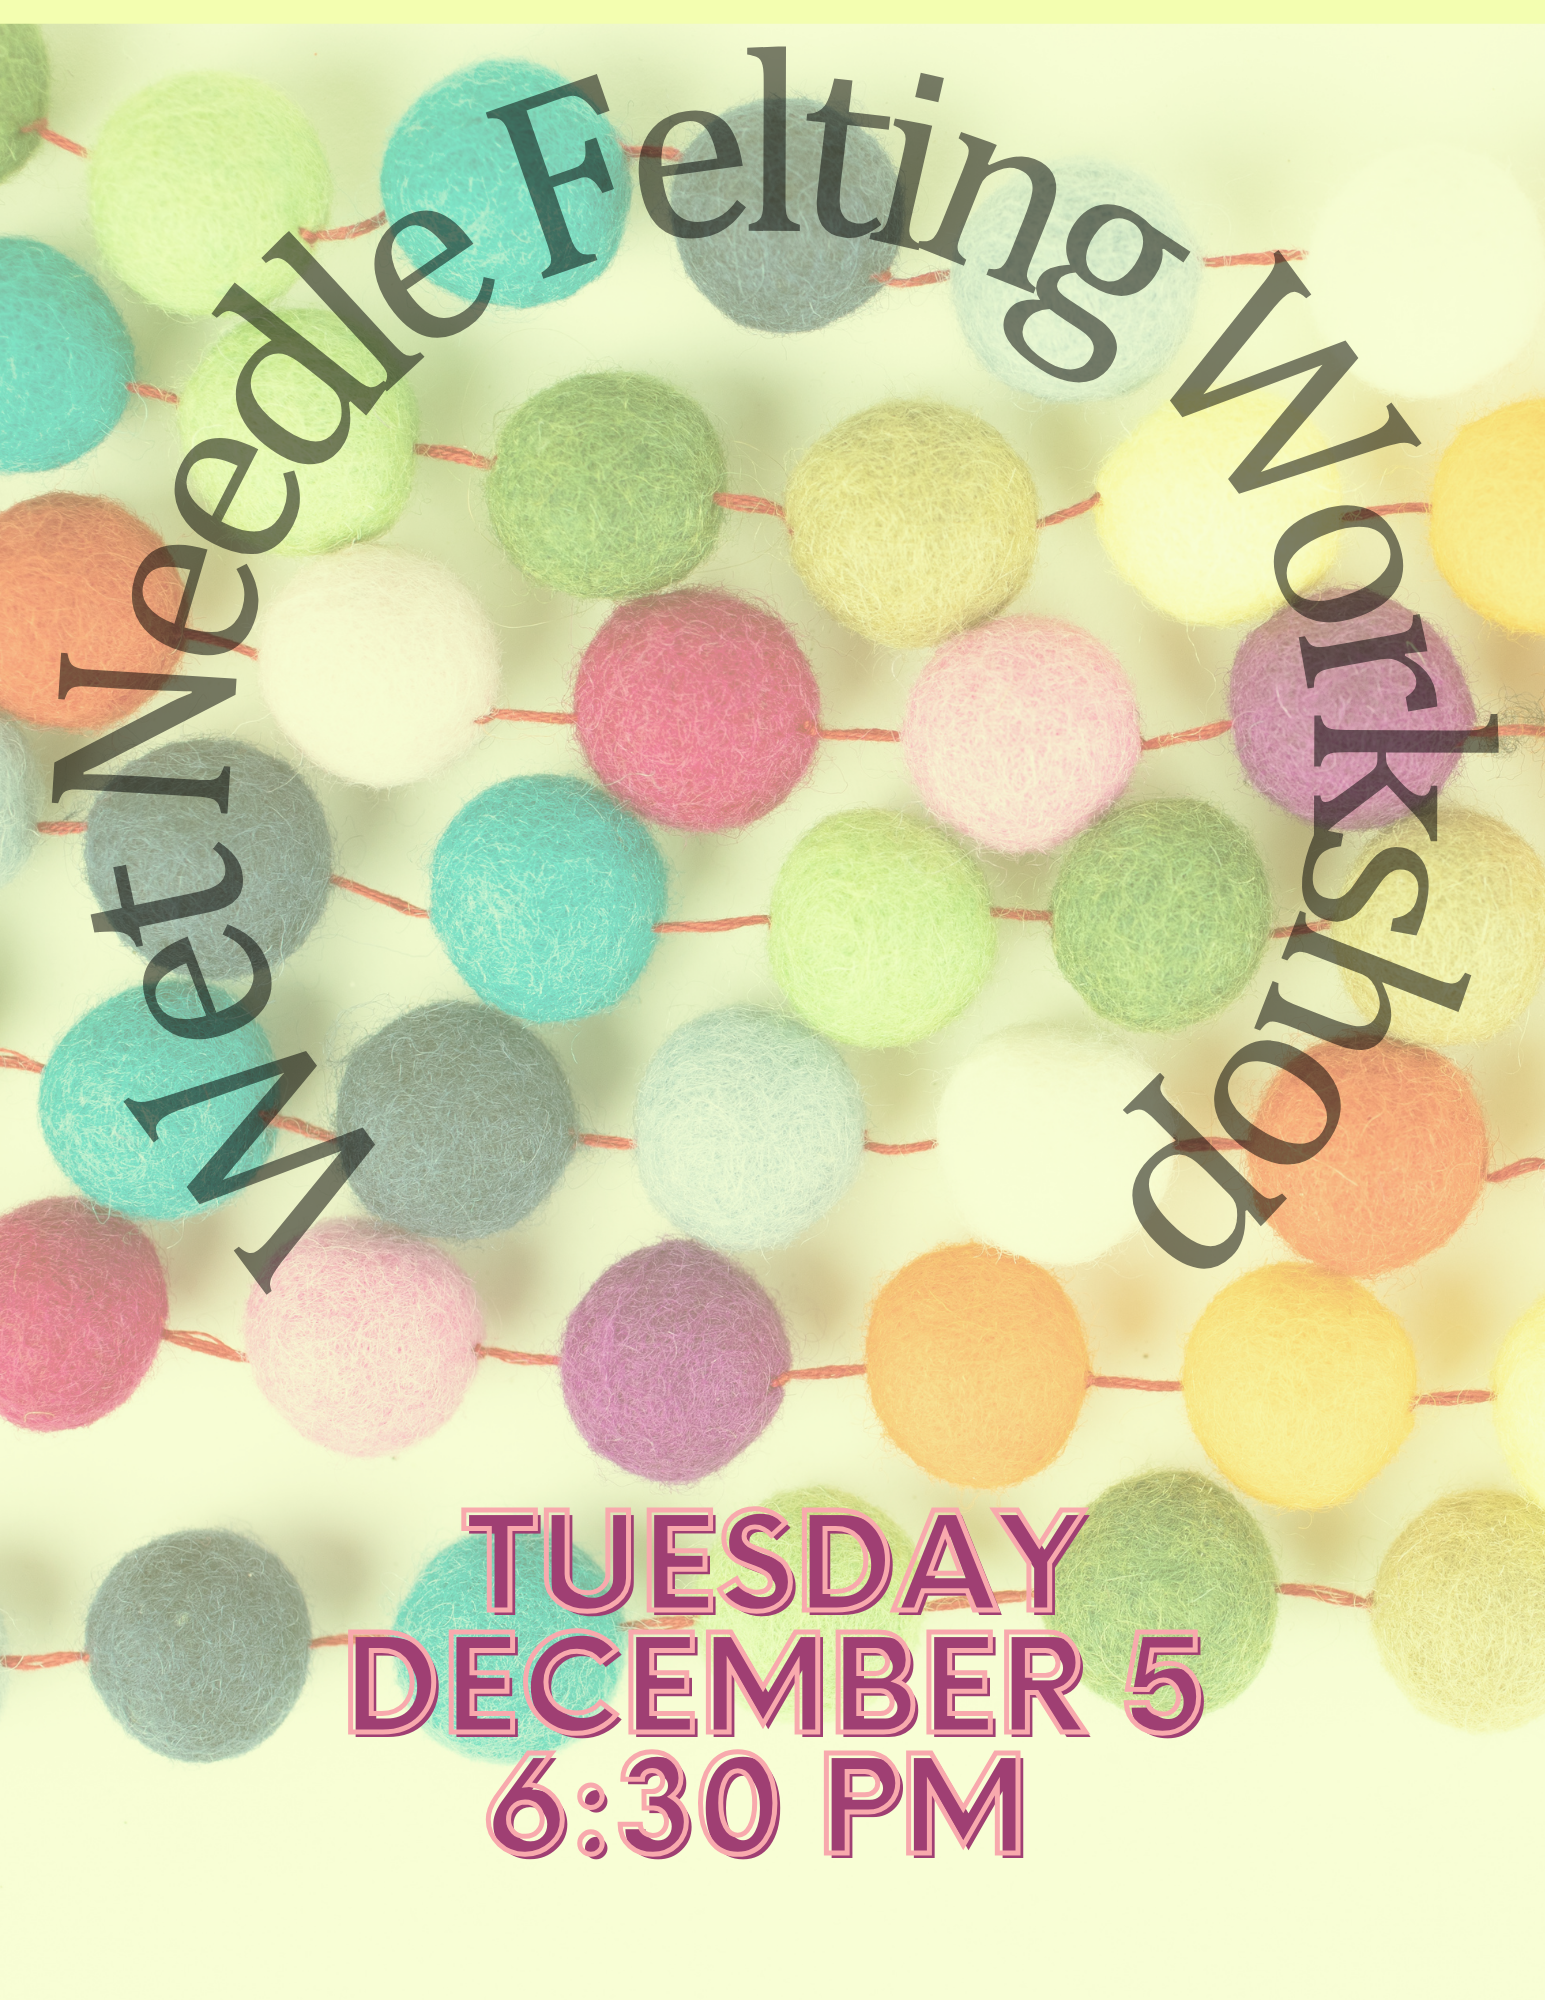 Wet Felting Workshop Tuesday December 5 6:30 PM Multicolored felted balls